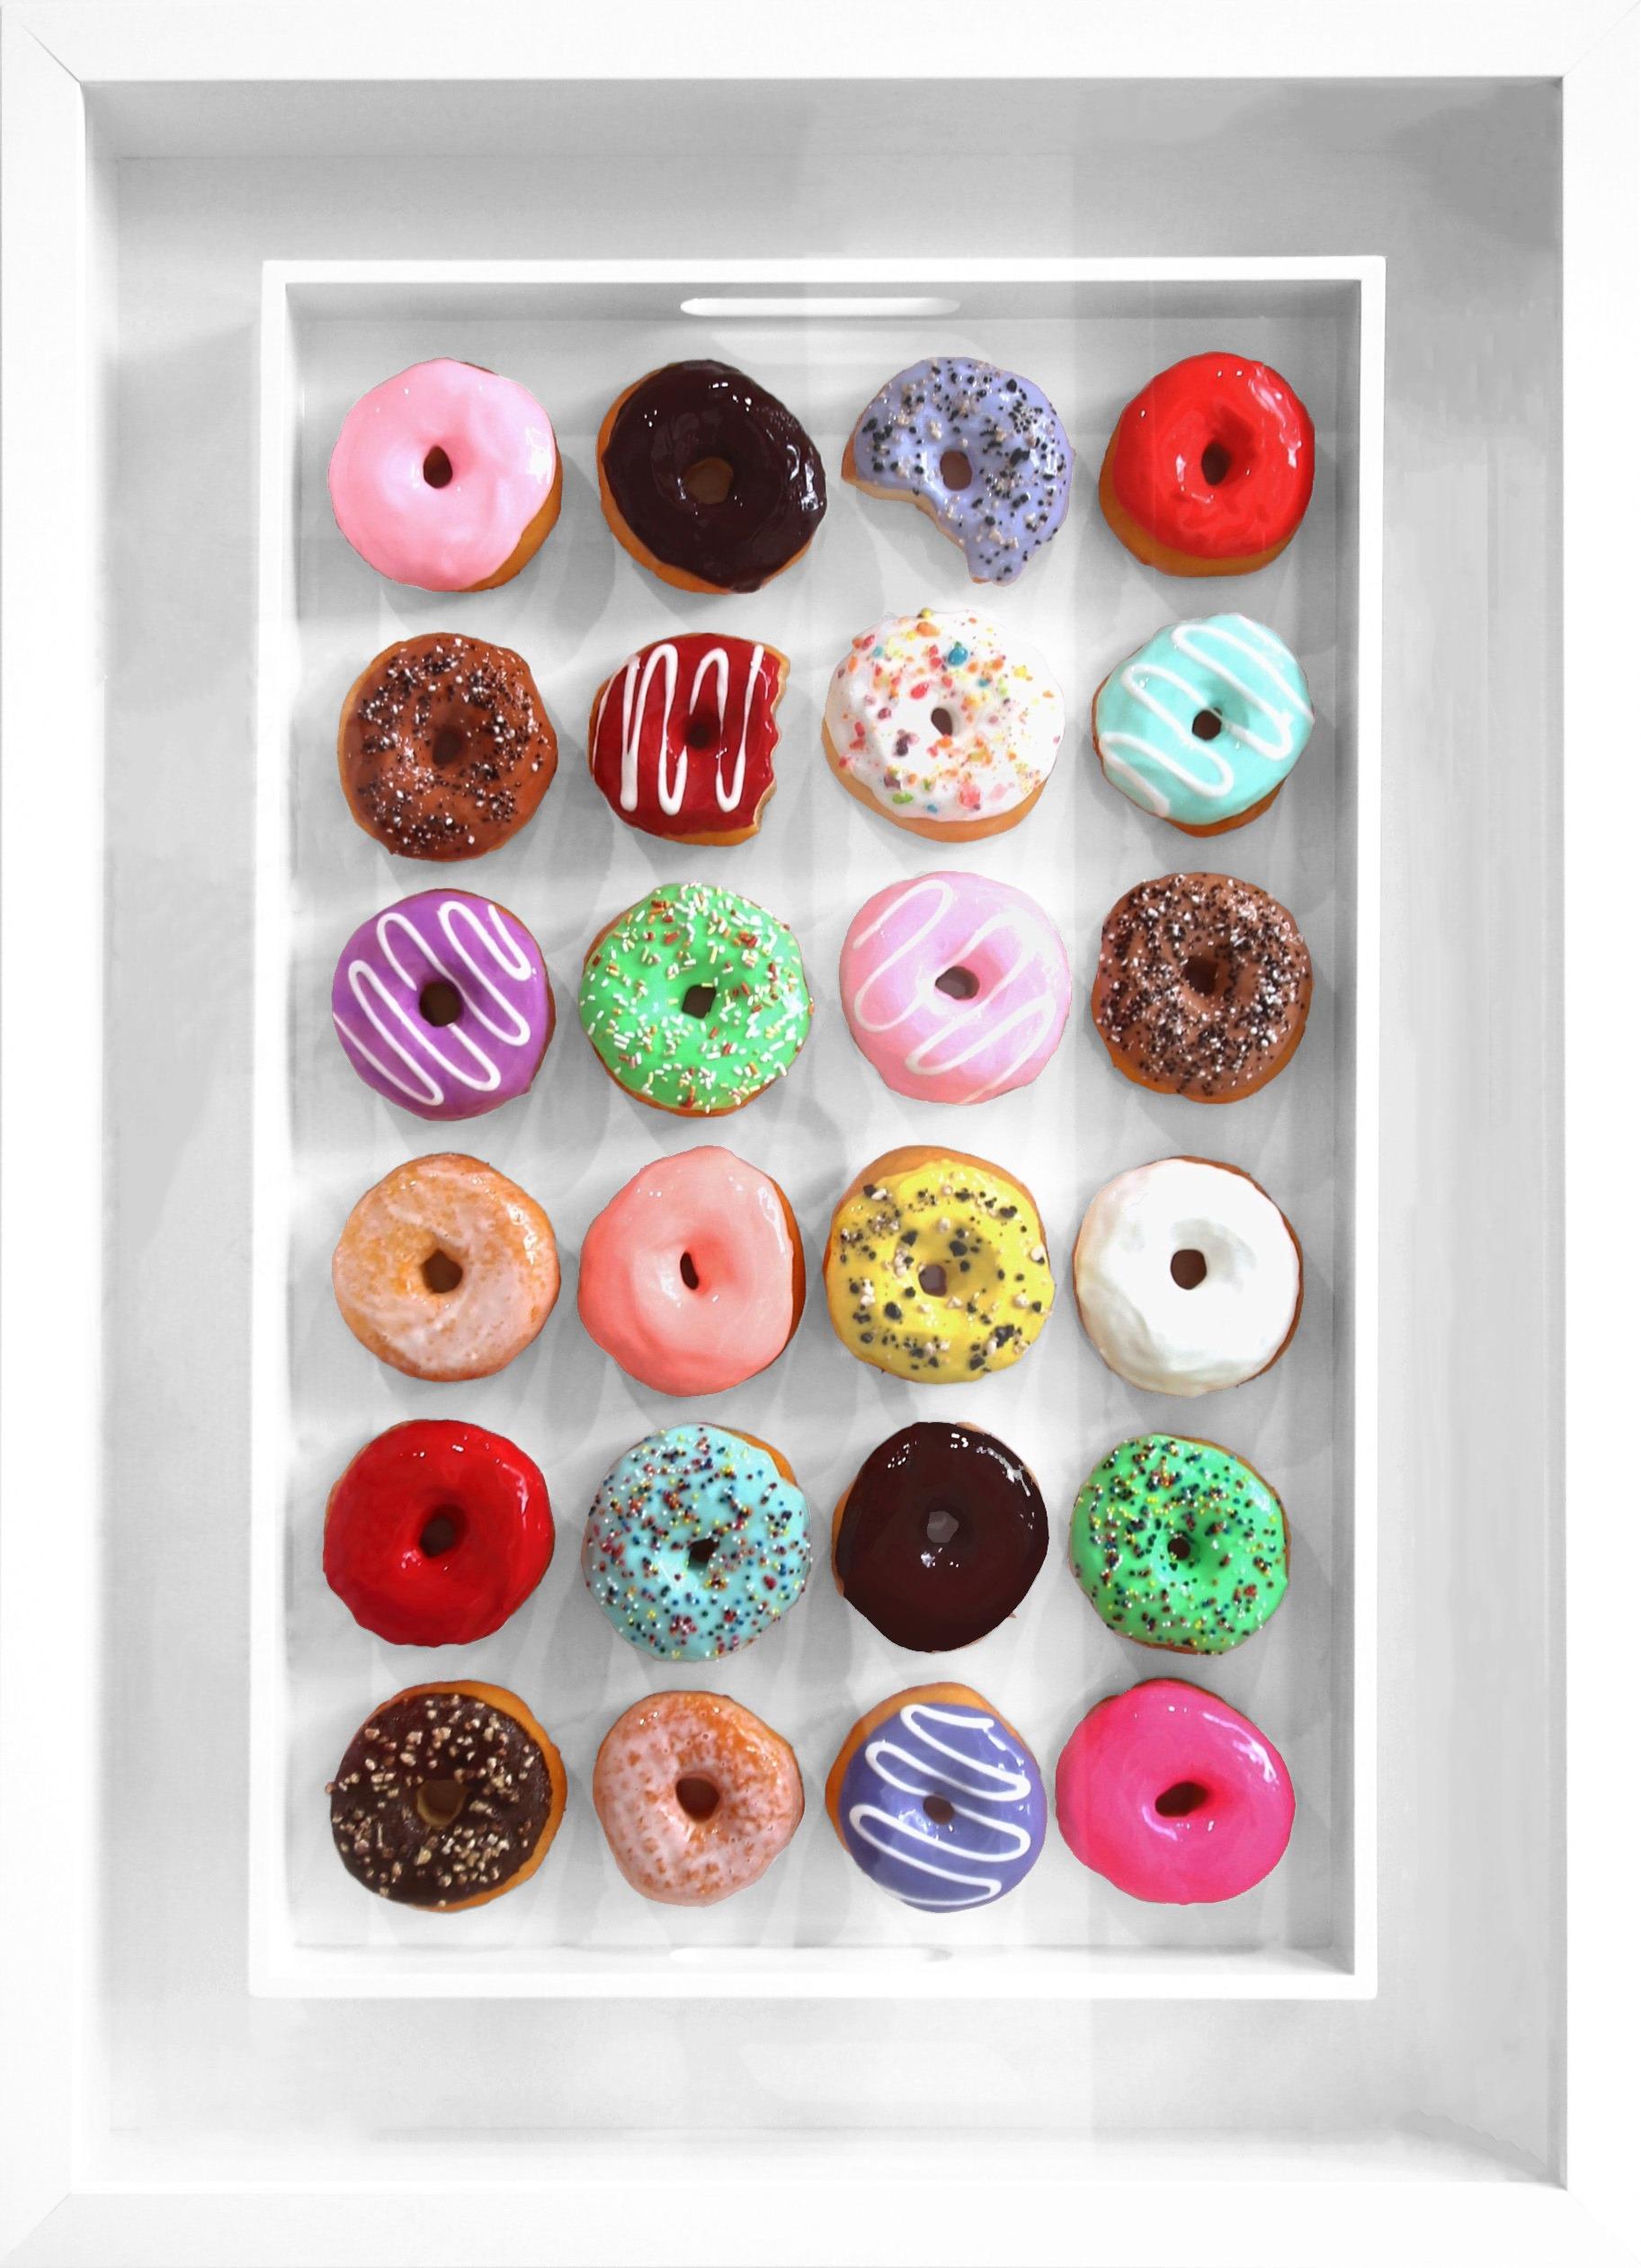 Pop Donuts - Mixed Media Art by Nelson De La Nuez